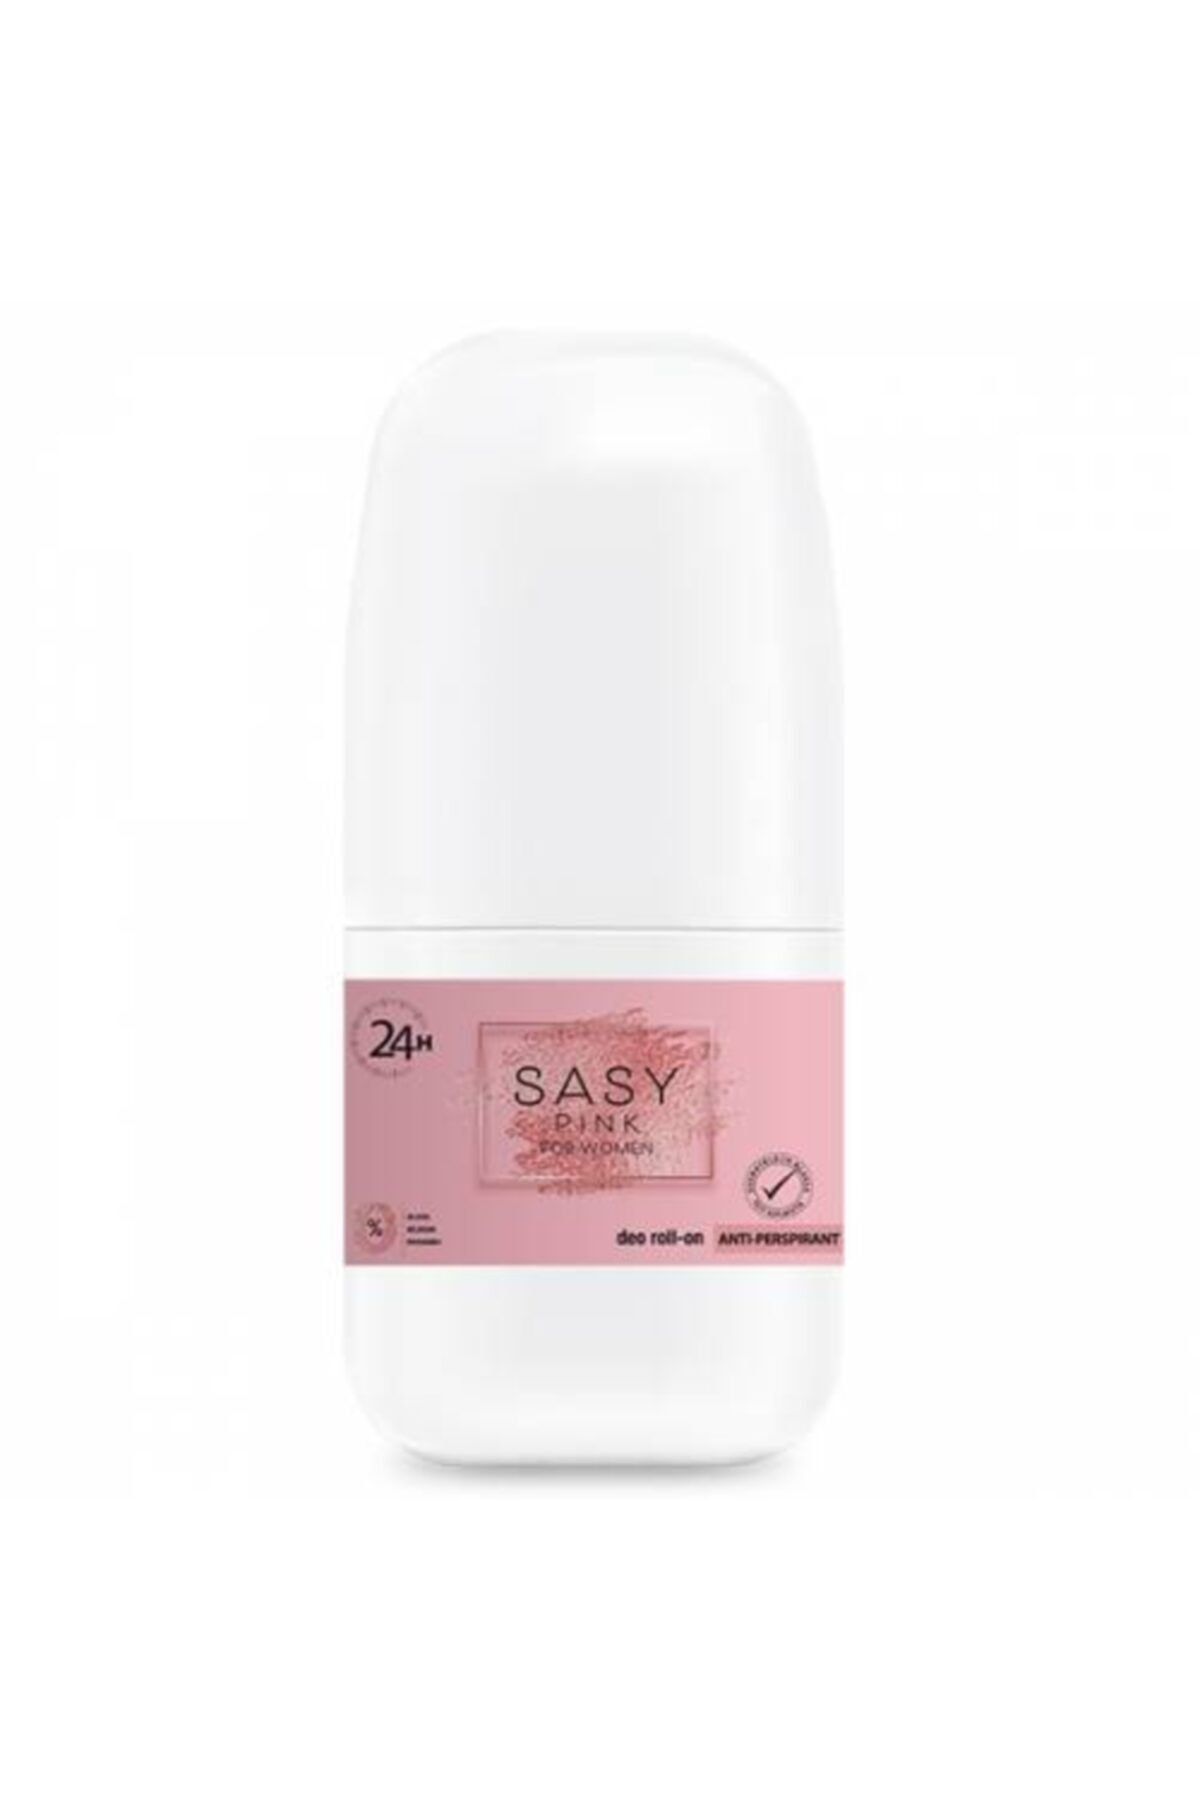 Durumax Biobellinda Sasy Pink Antiperspirant Deo Roll-on For Women-50ml